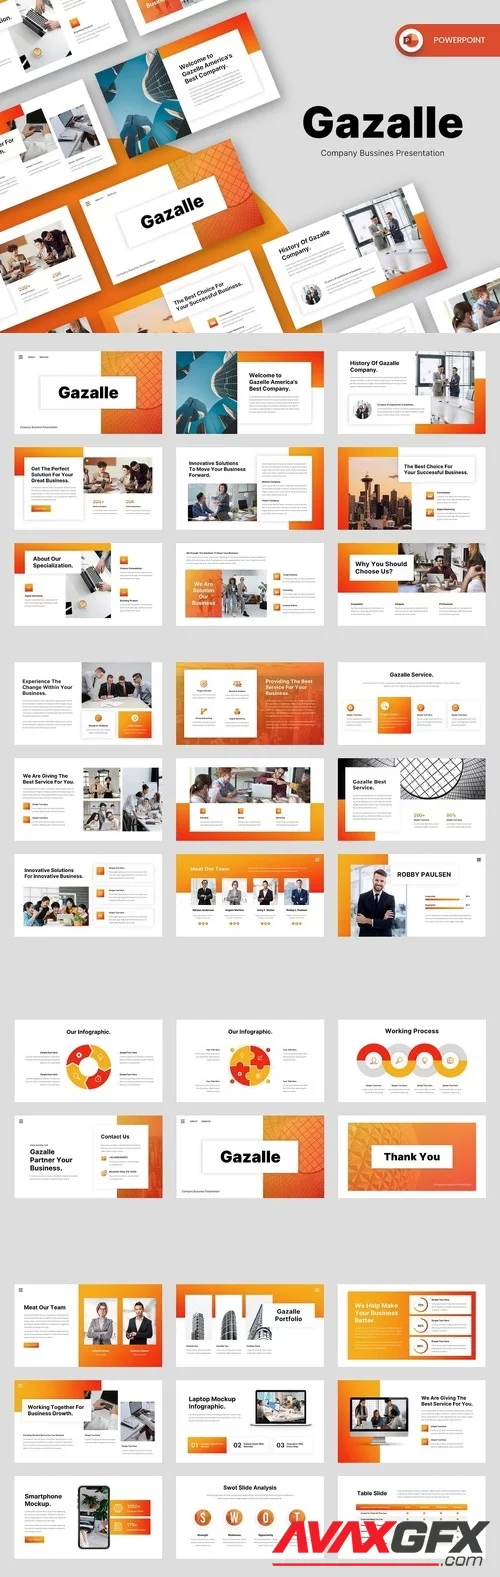 Gazalle - Company Business PowerPoint Template ZBVDZW4 [PPTX]